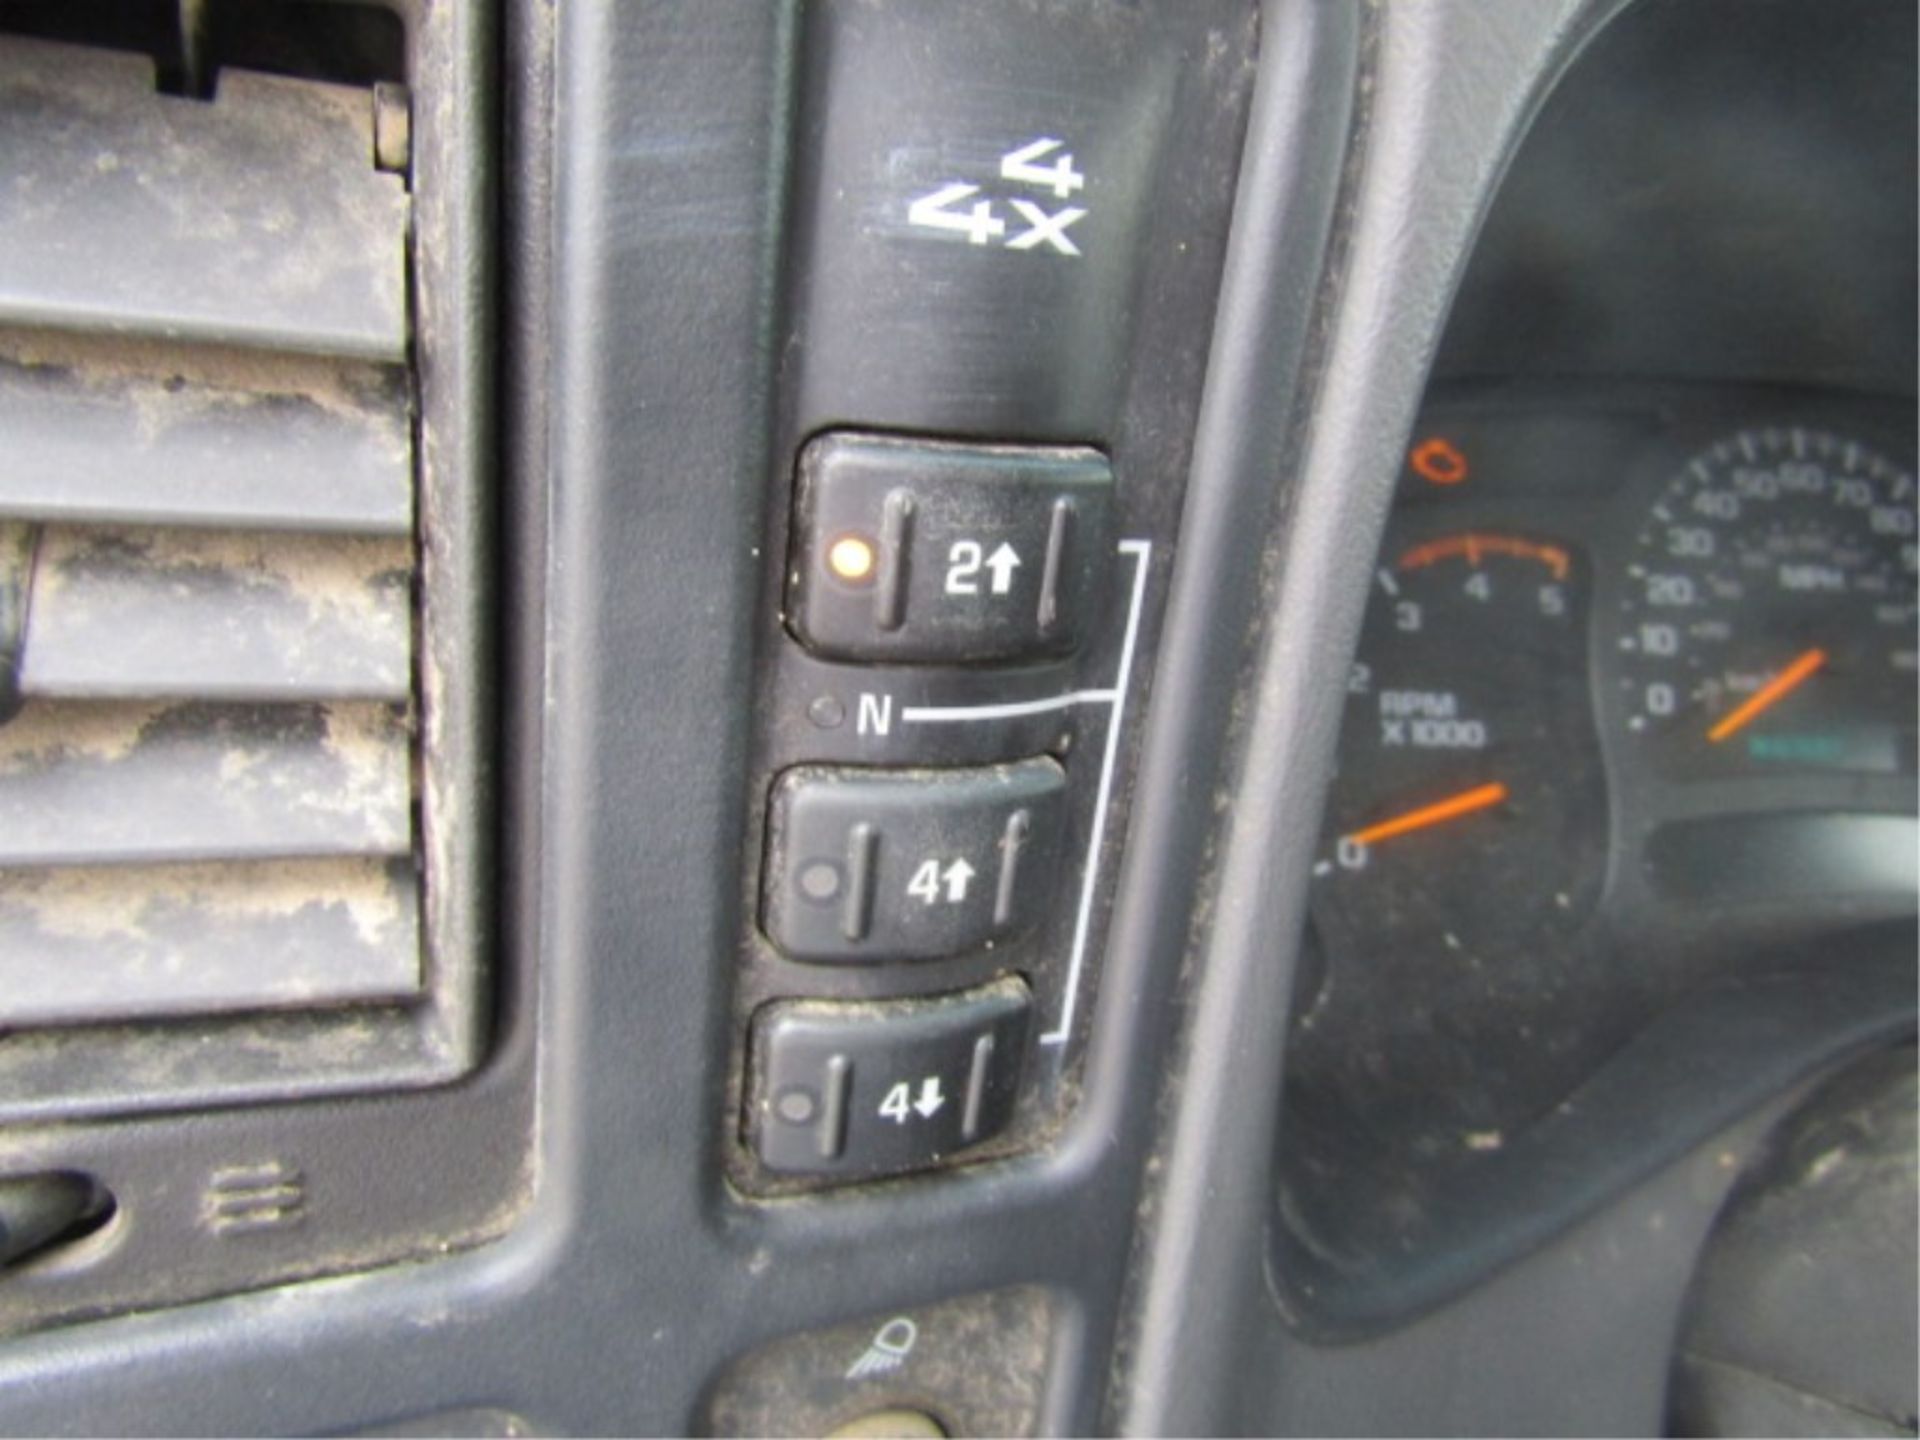 2003 Chevy Silverado K2500HD Crew Cab 4x4 Truck, Vin#1GCHK23183F172596, Automatic 4x4 - Image 10 of 20